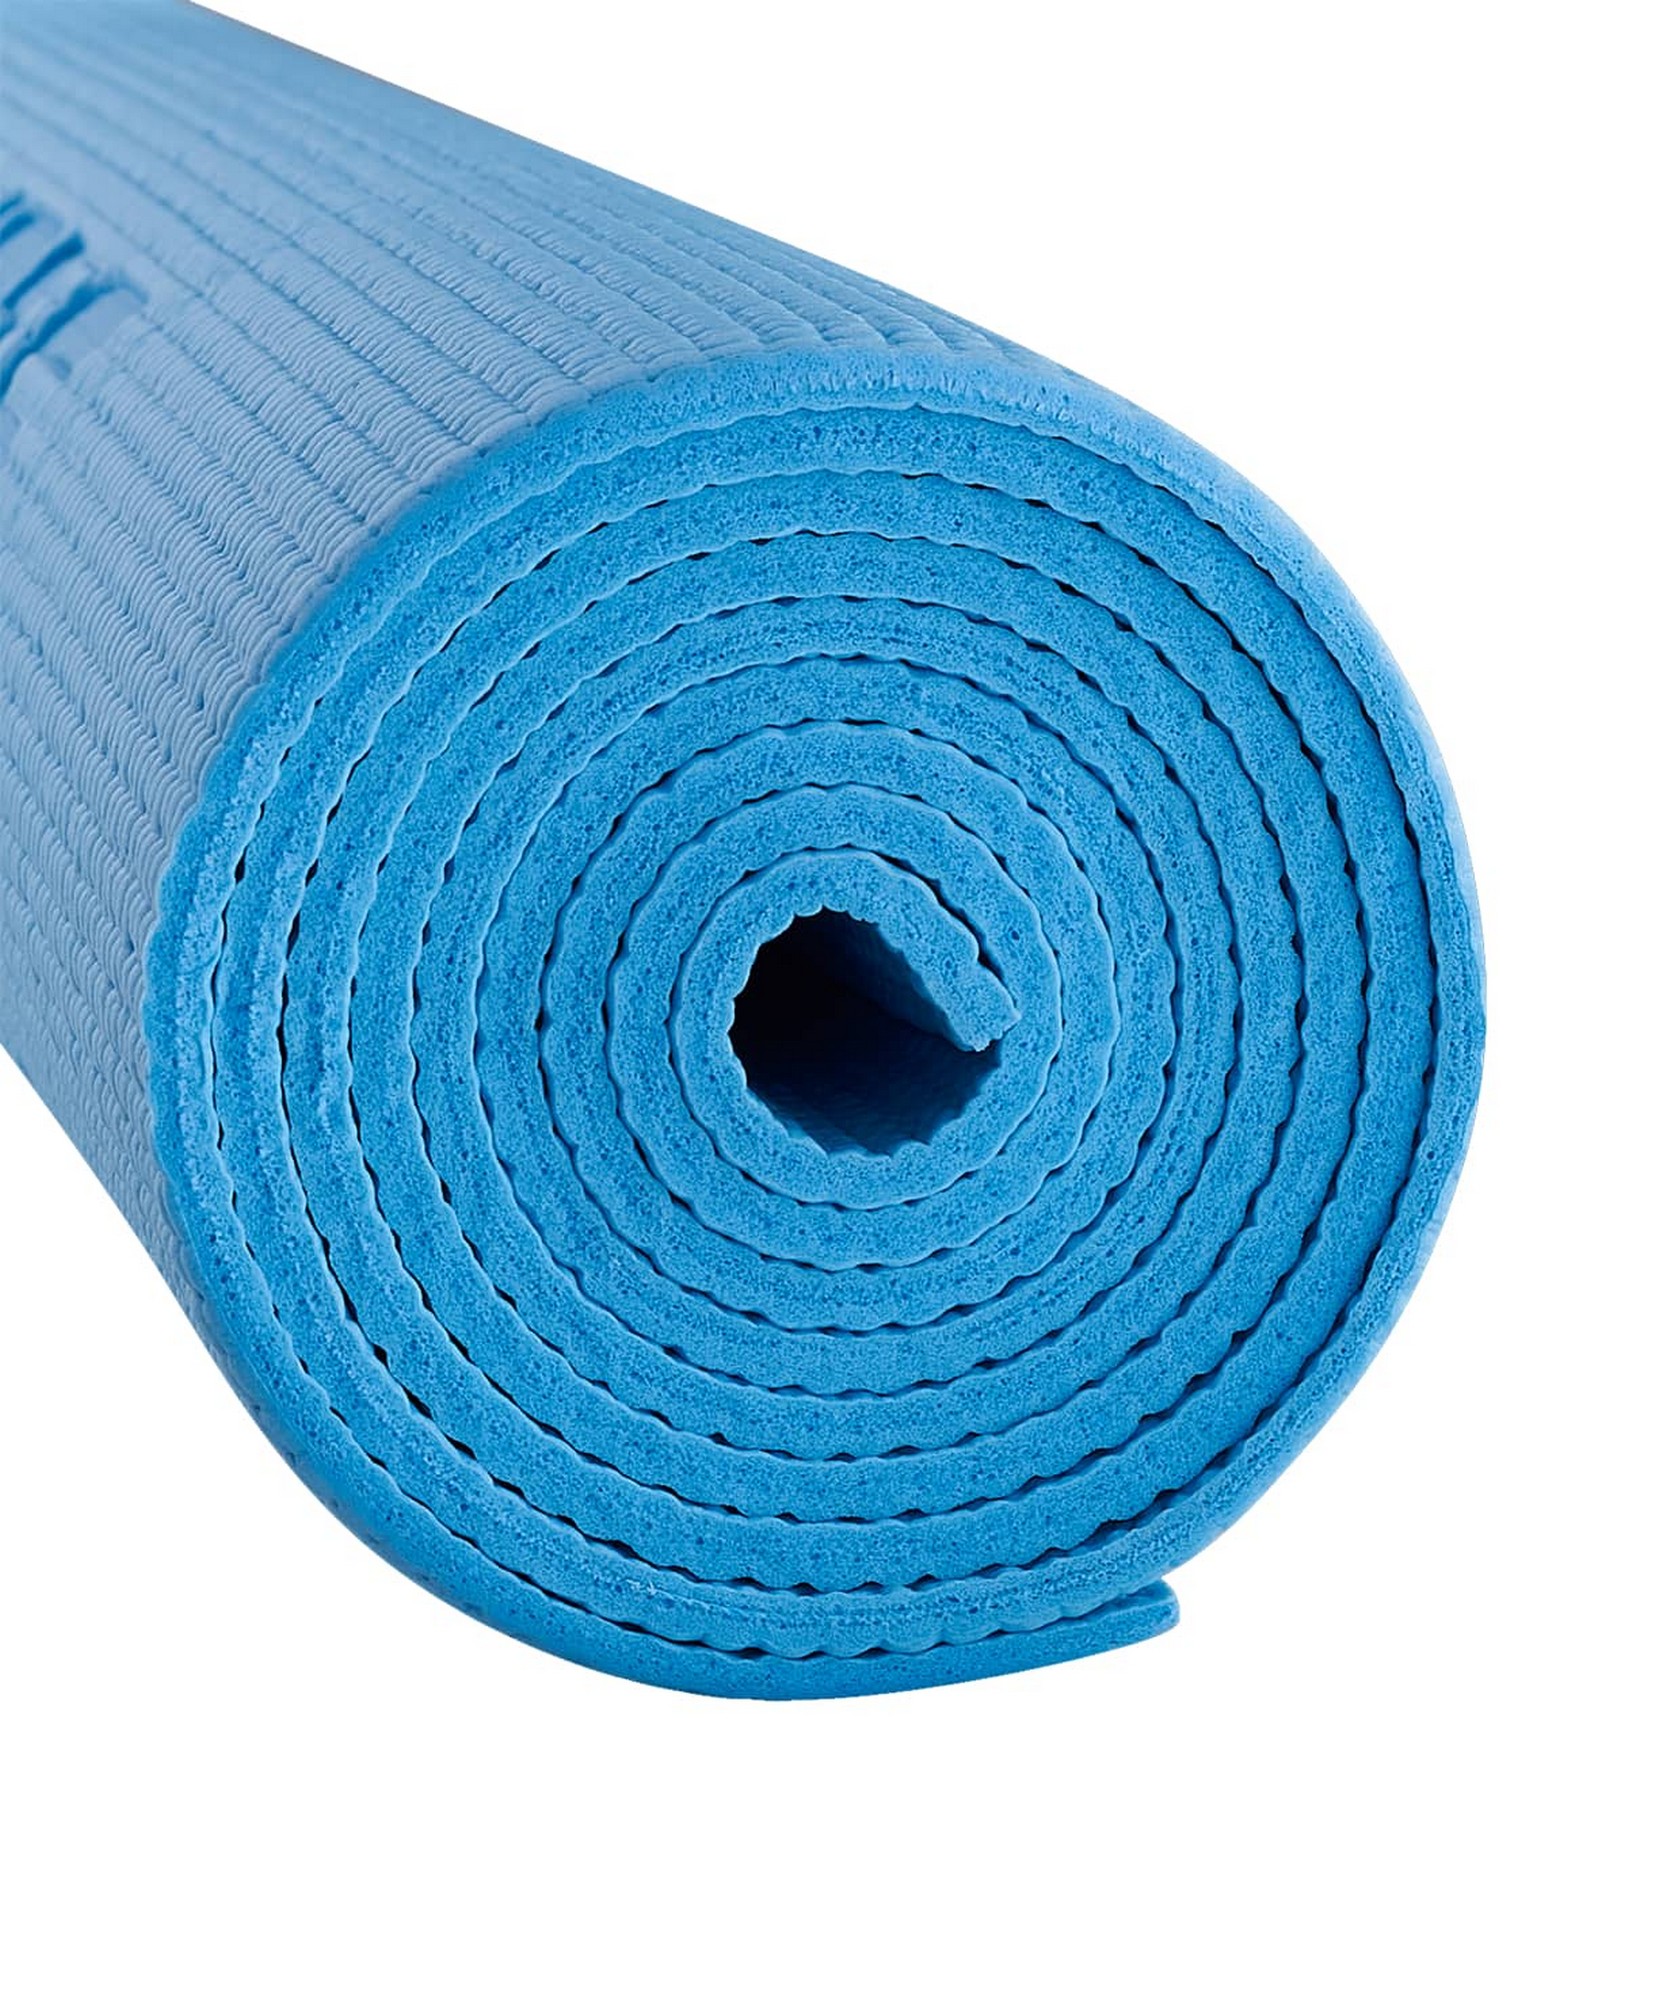 Коврик для йоги и фитнеса 173x61x0,5см Star Fit PVC FM-101 синий пастель 1667_2000